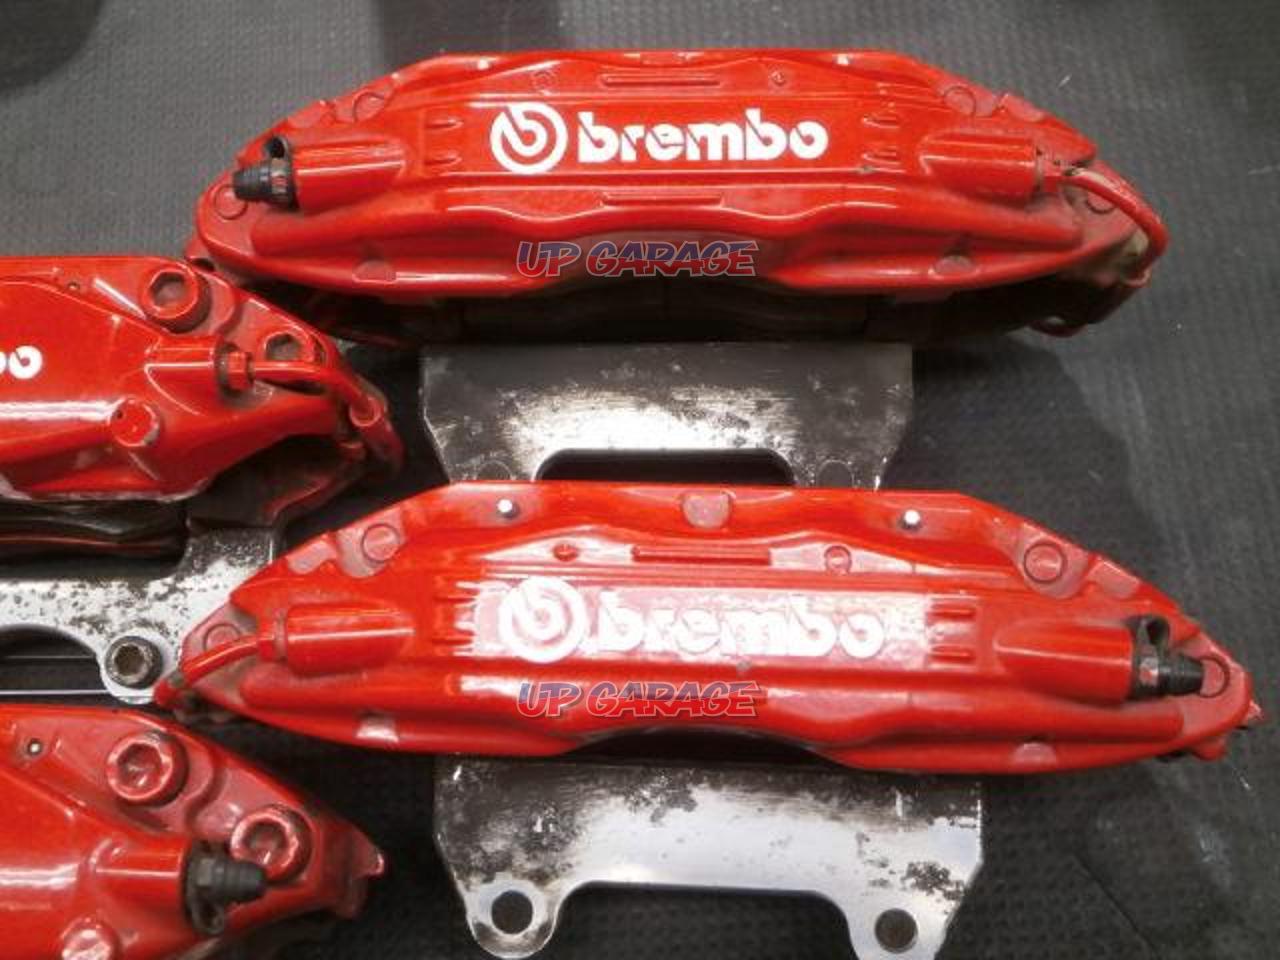 brembo F50 キャリパー